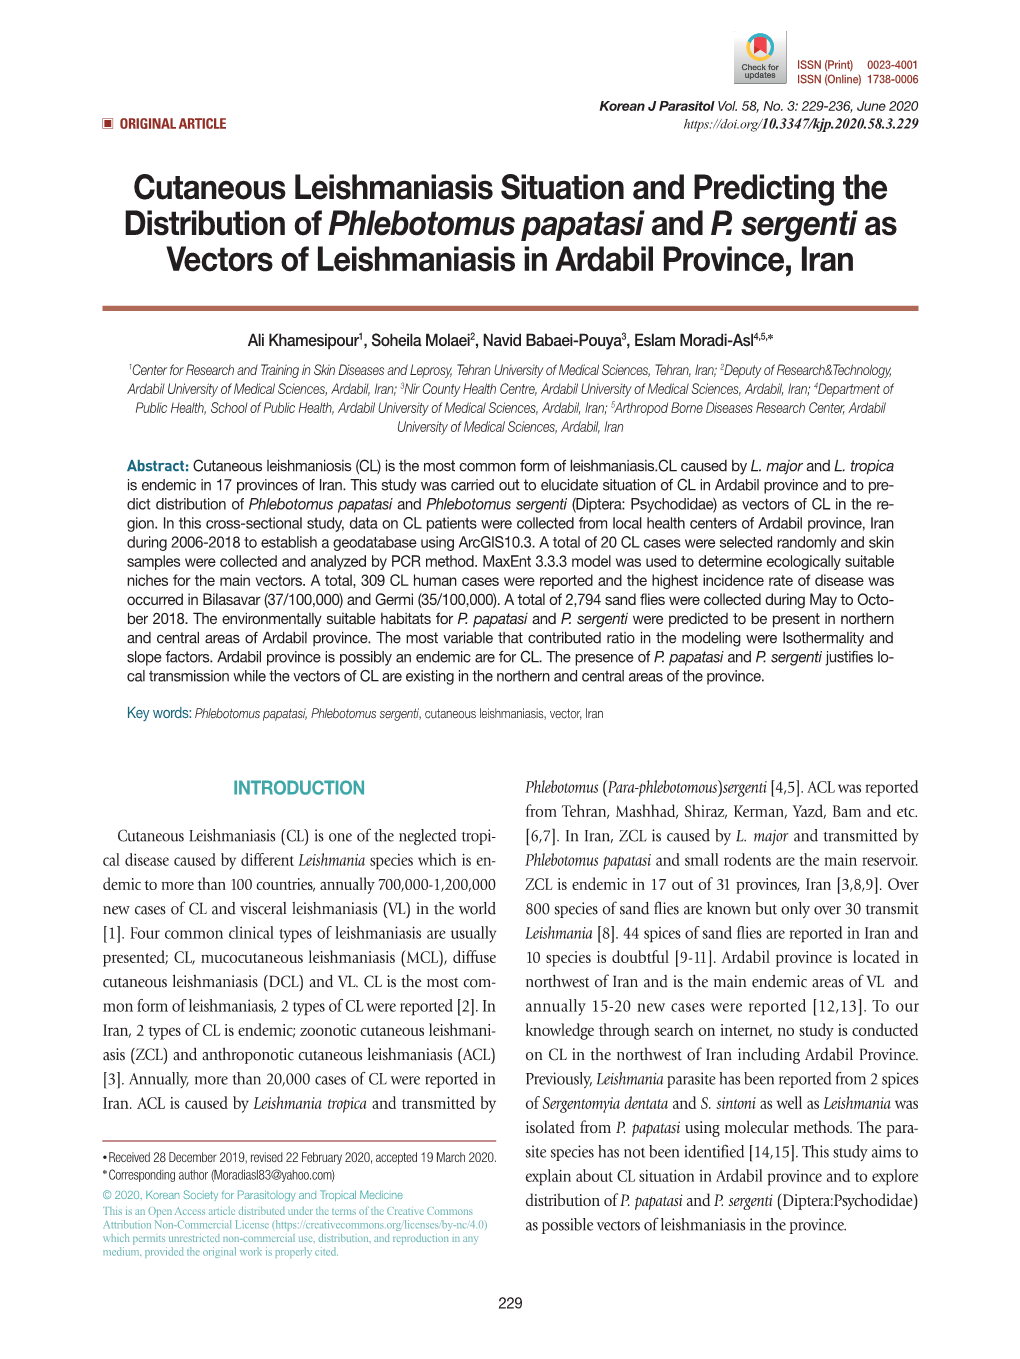 Cutaneous Leishmaniasis Situation and Predicting the Distribution of Phlebotomus Papatasi and P